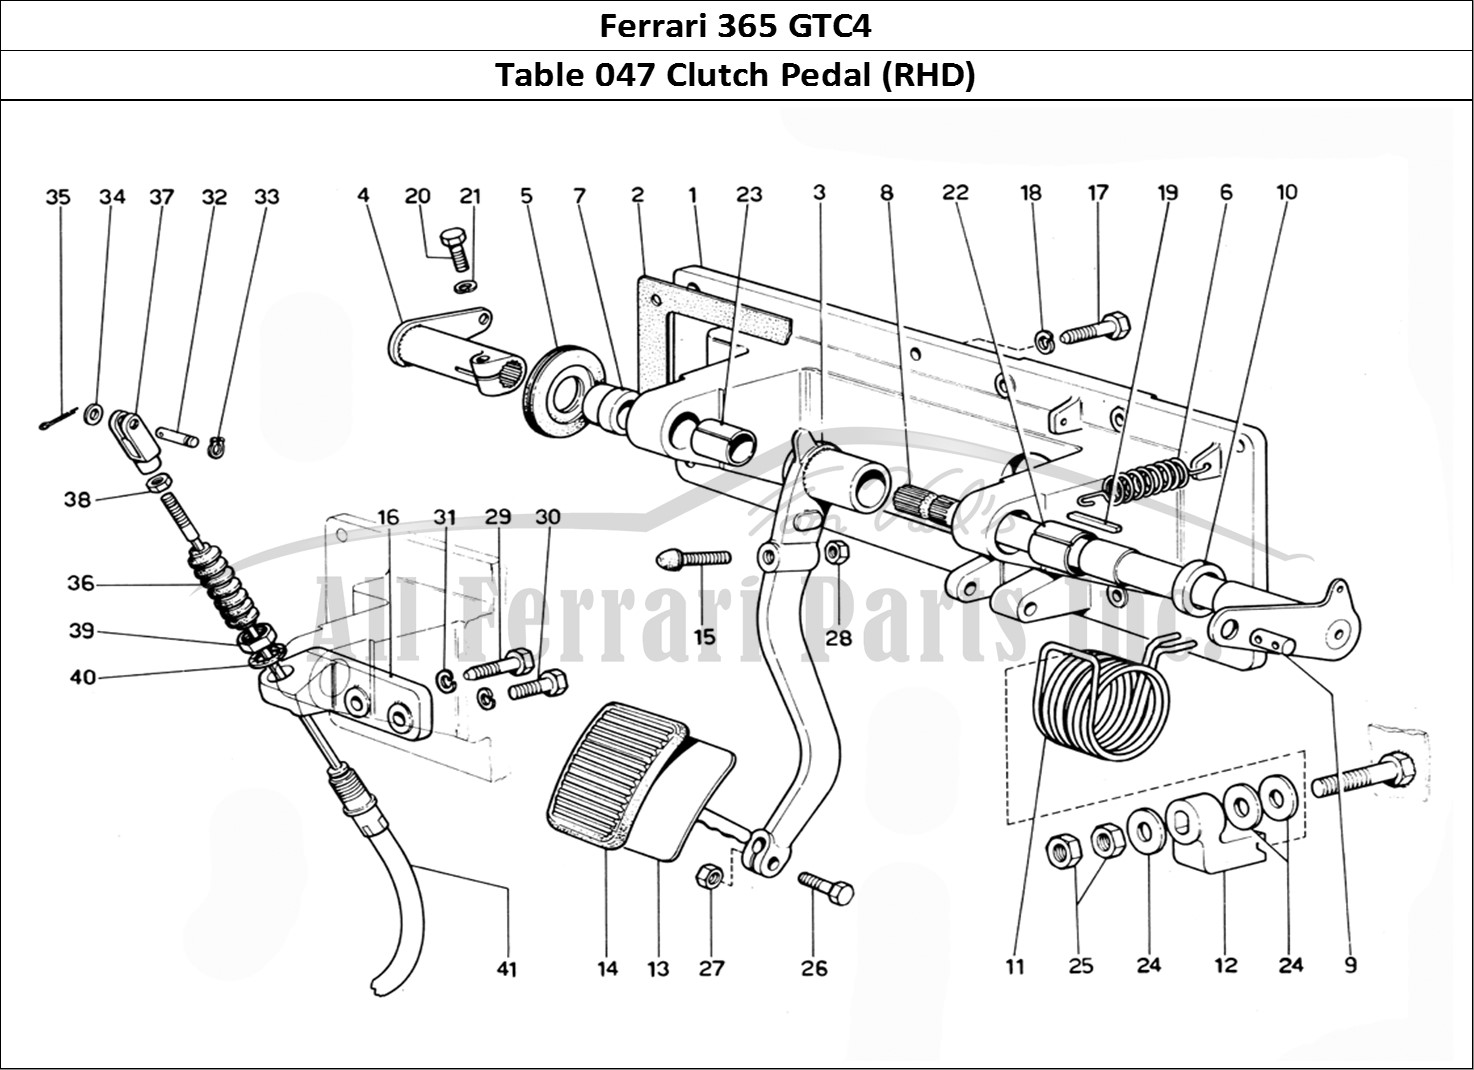 Ferrari Parts Ferrari 365 GTC4 (Mechanical) Page 047 Clutch pedal (RHD)